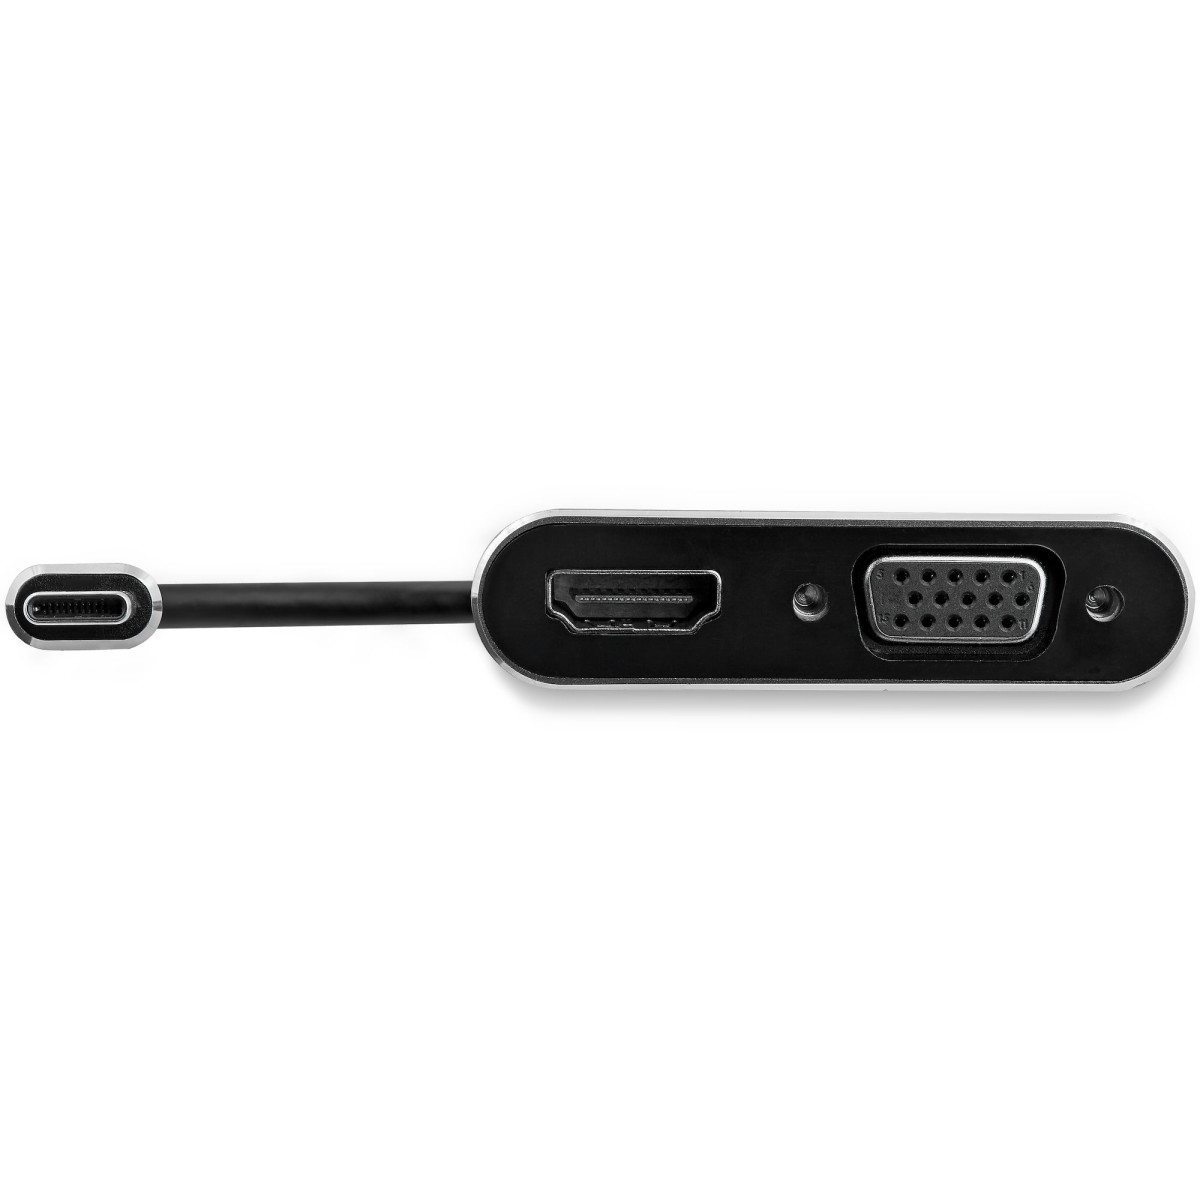 USB C to VGA and HDMI Adapter - Aluminum